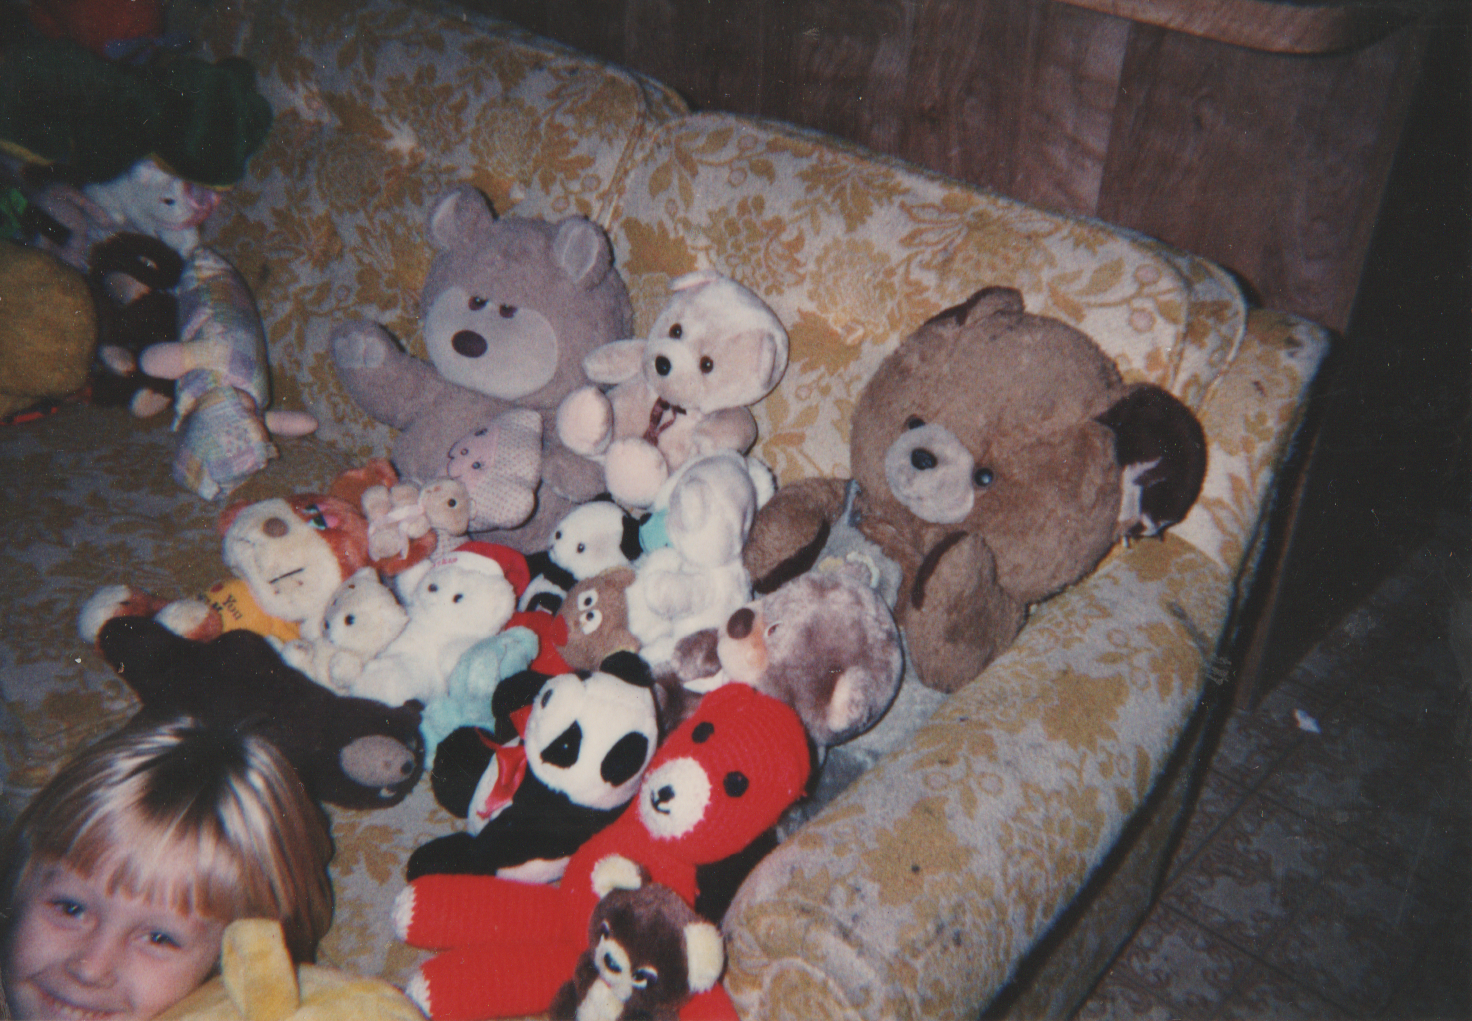 1993 - Stuffed Animals, 163 Living Room, Crystal, stuffed bears, panda.png